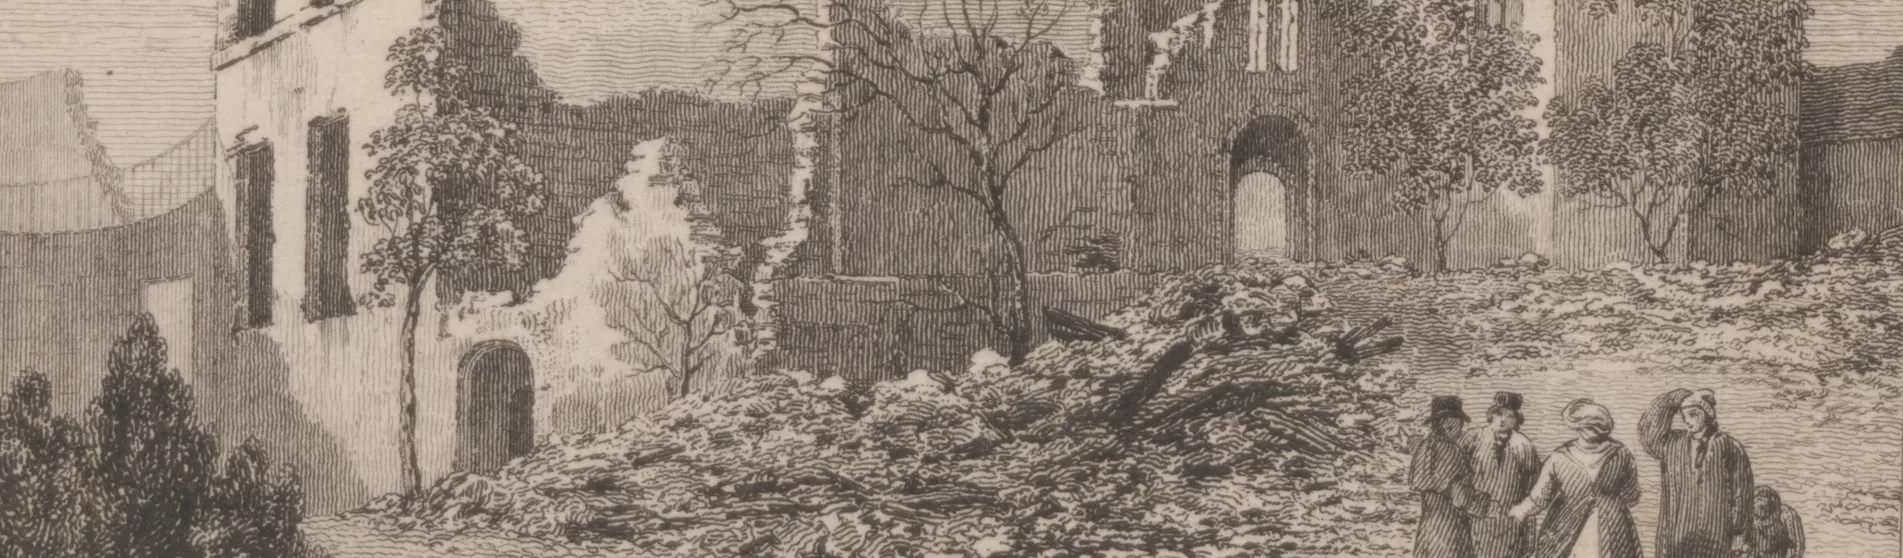 Battlefield ruins, after Waterloo, 1815